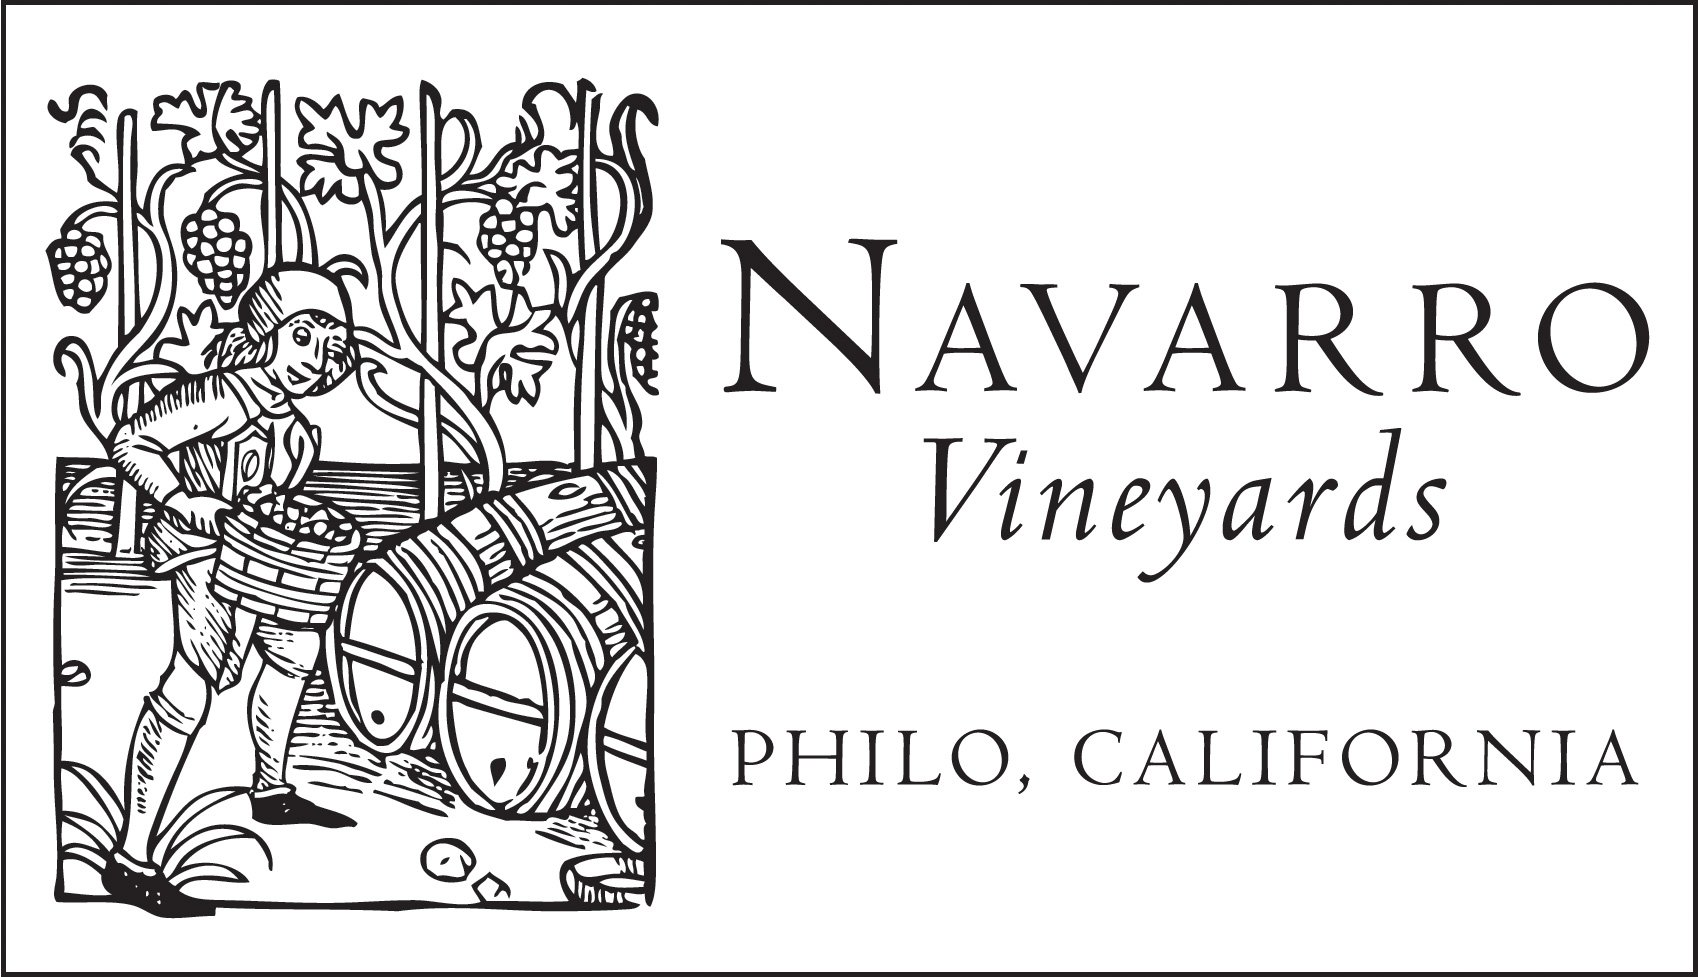 Navarro Vineyards: Philo, California